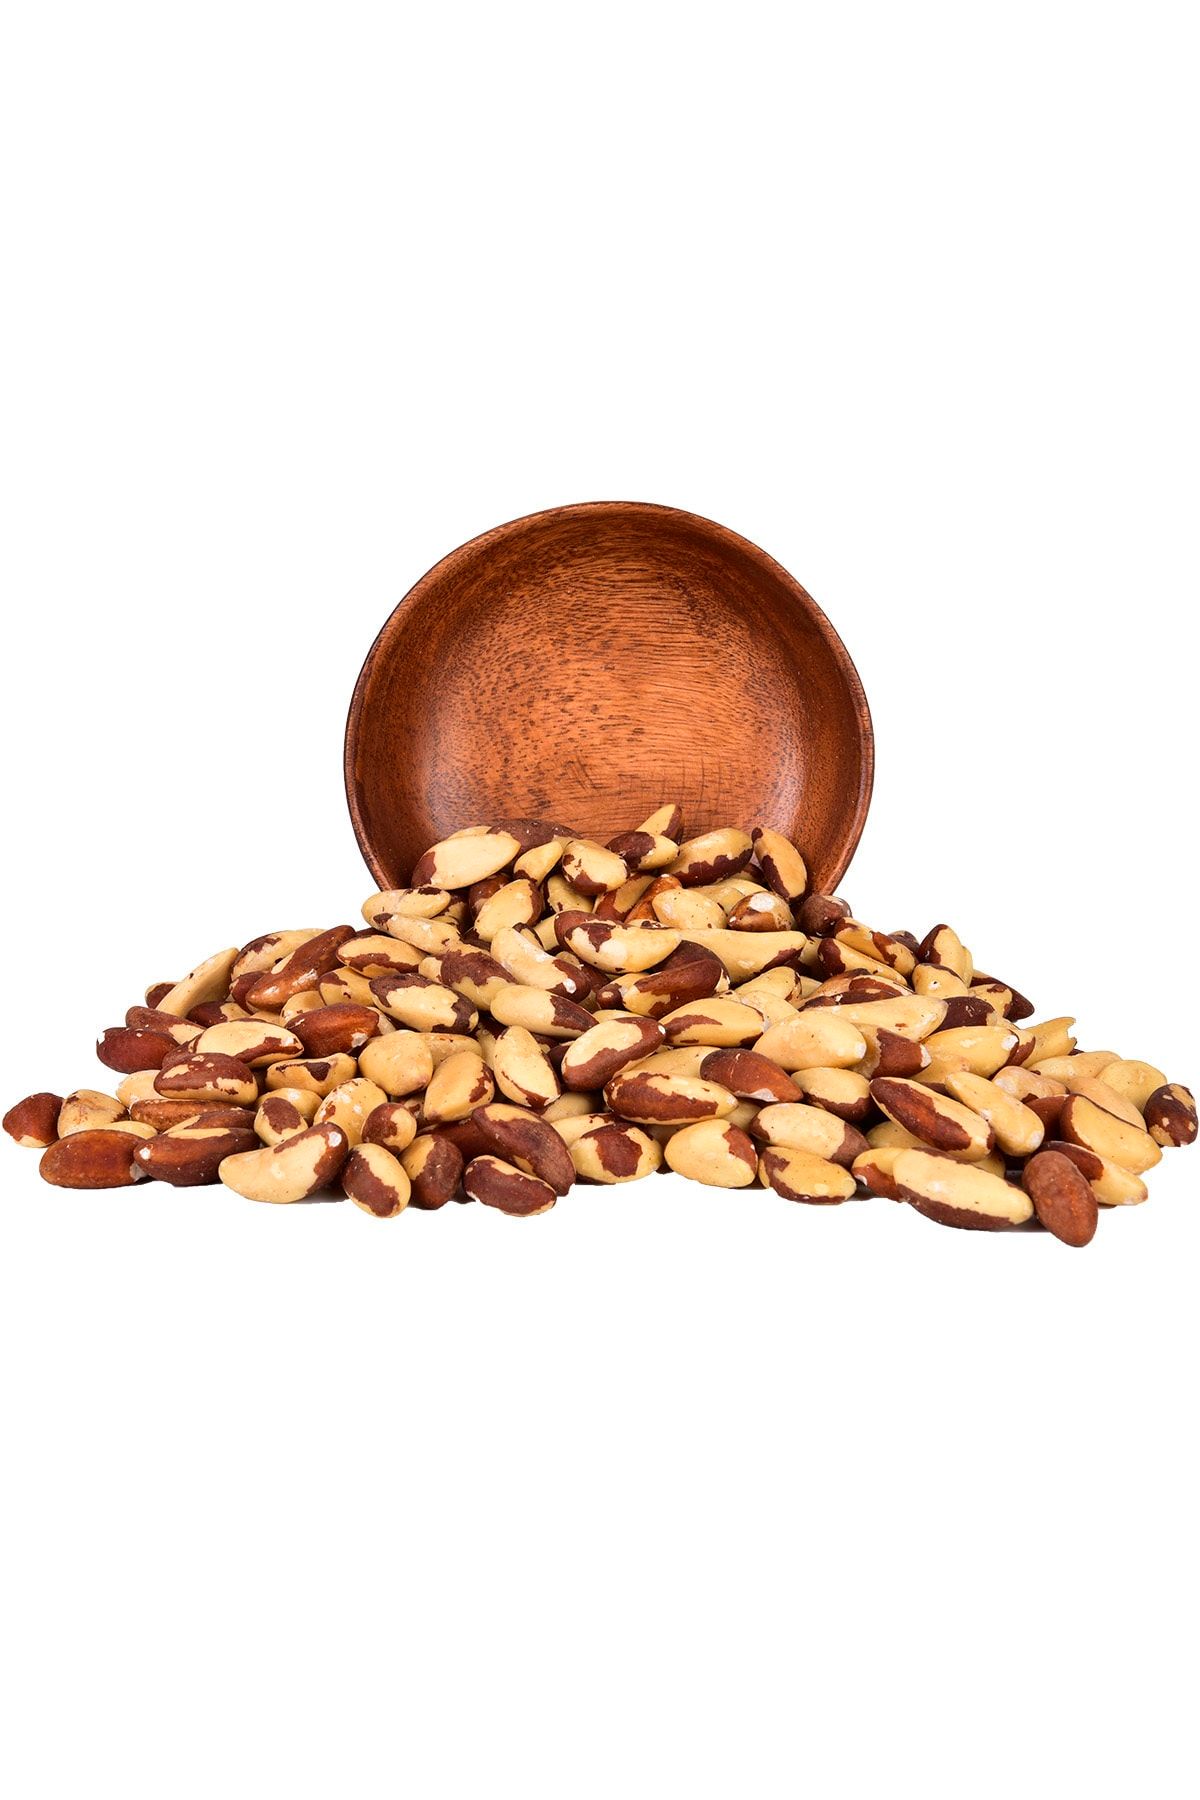 Malatya Pazarı Brazil Nuts ( Brezilya Cevizi) 500 G